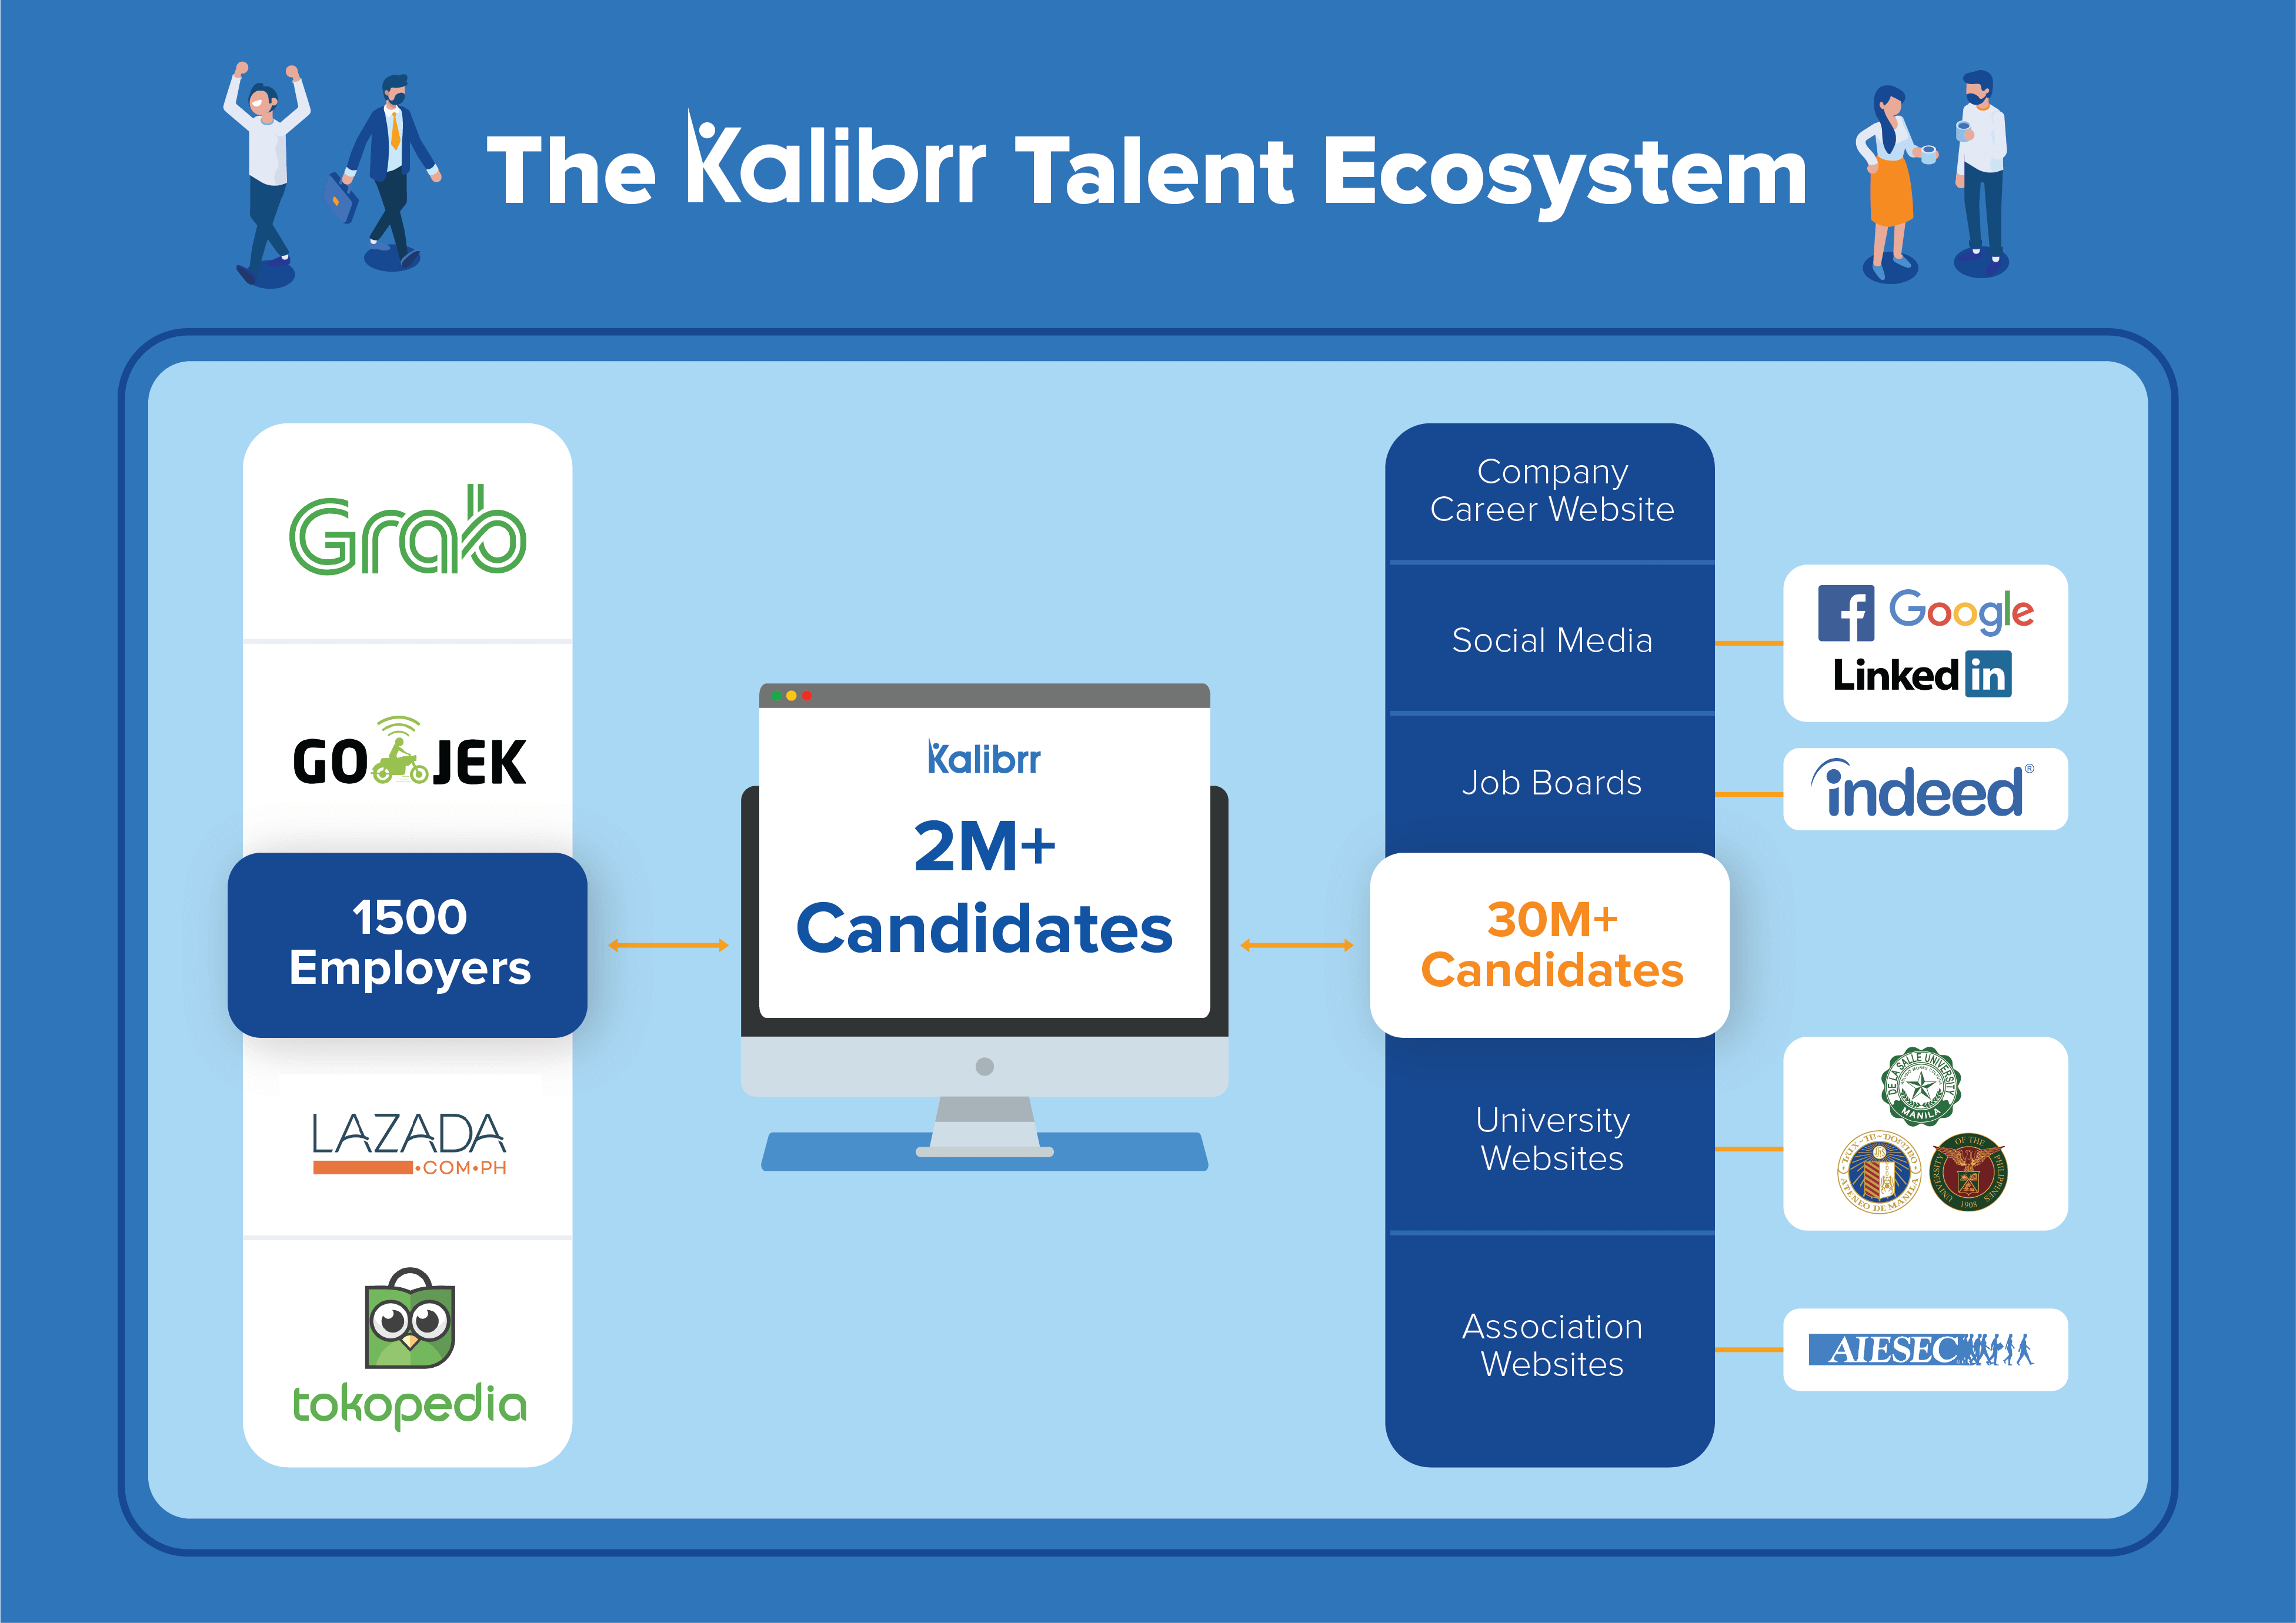 kalibrr-not-only-a-hiring-platform-but-your-talent-ecosystem